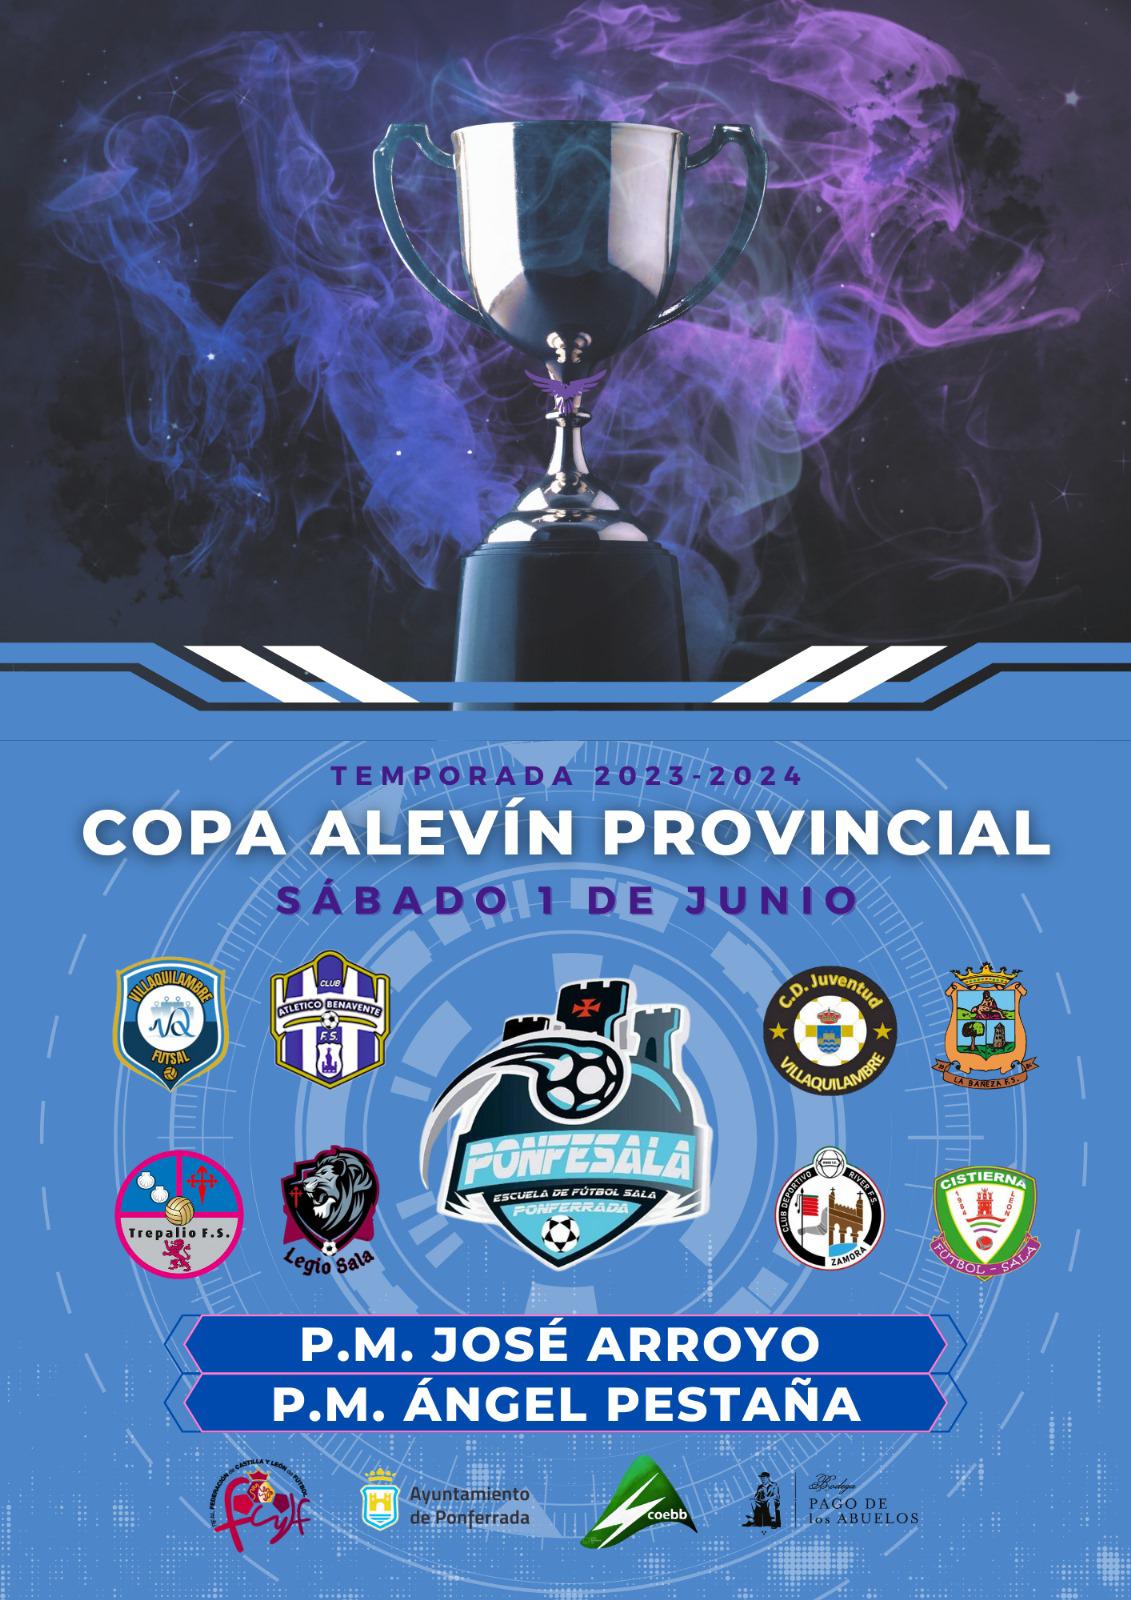 Llega la Copa Alevín Provincial de Futsal a Ponferrada de la mano del CD Ponfe 2